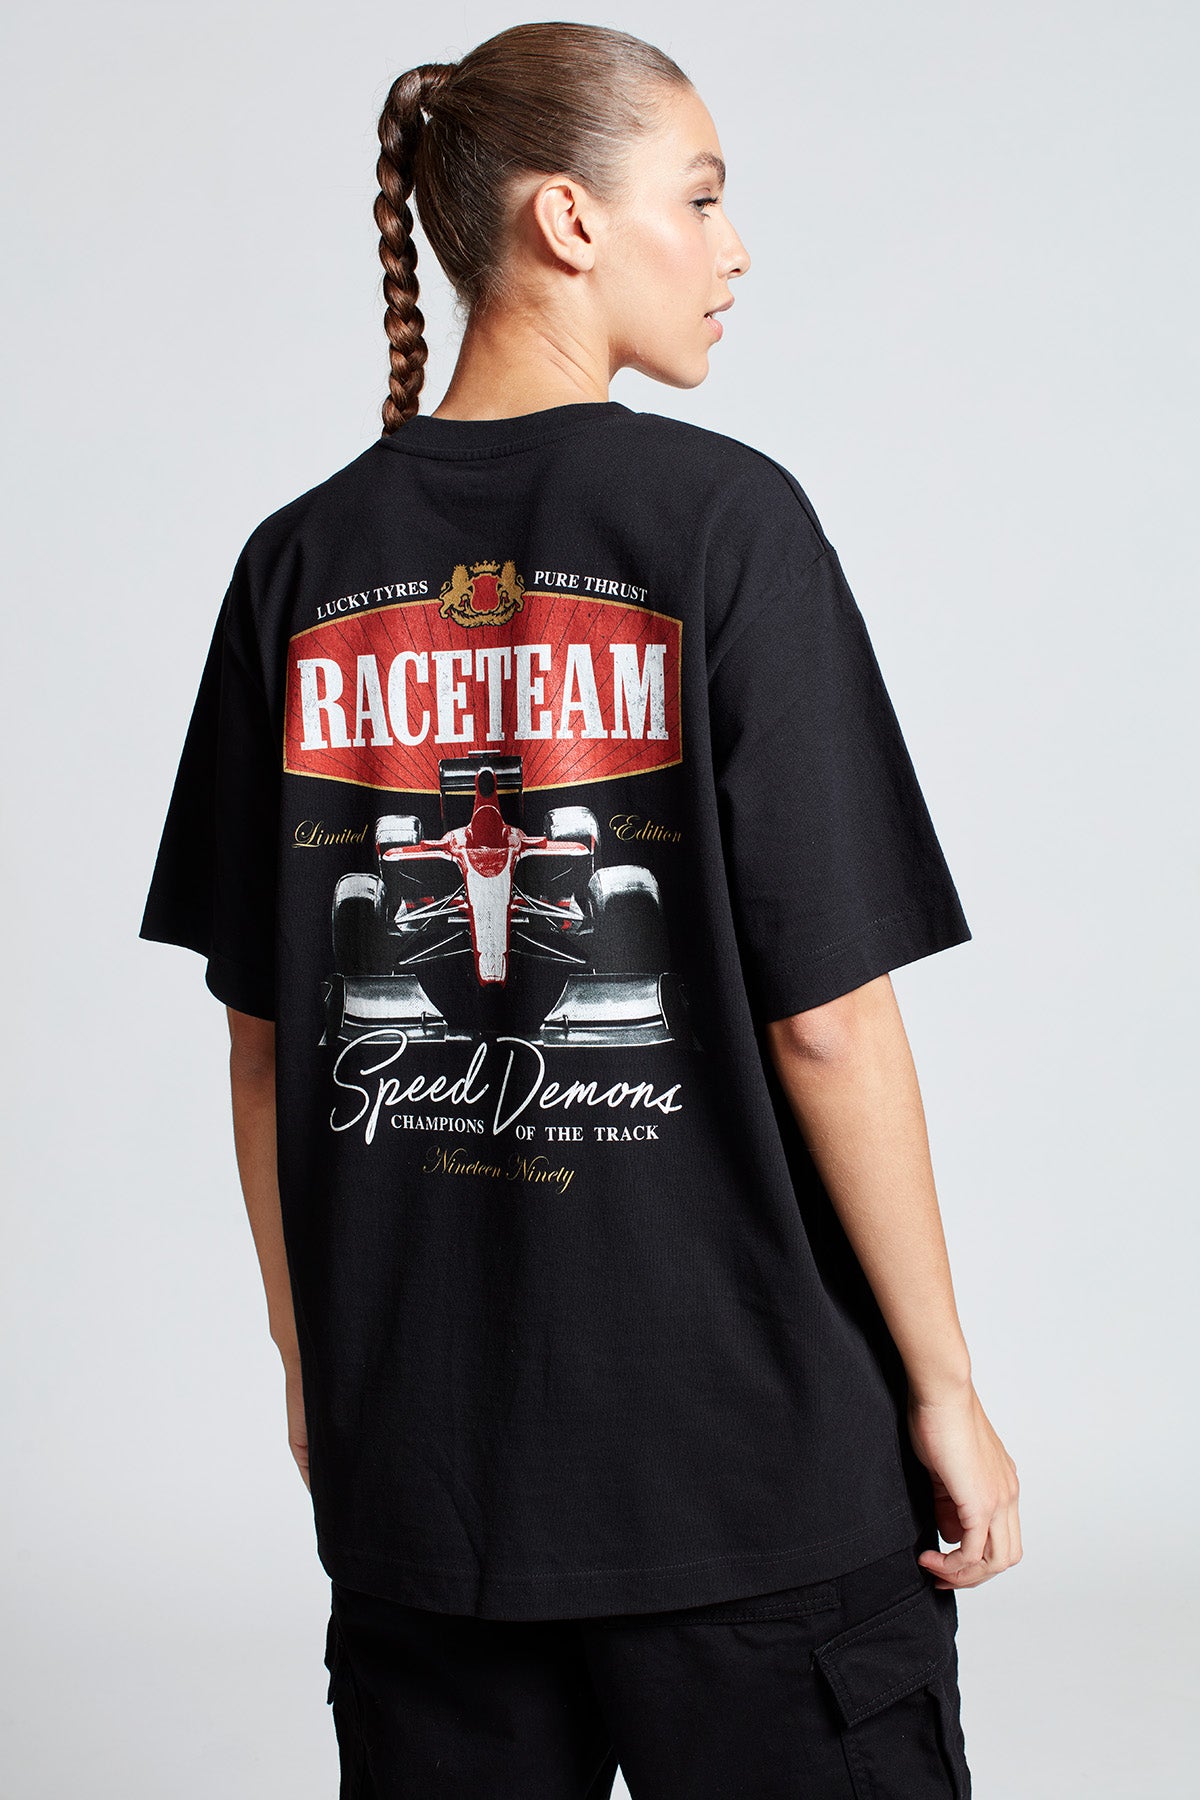 Saturday Society Raceteam T-shirt in Black